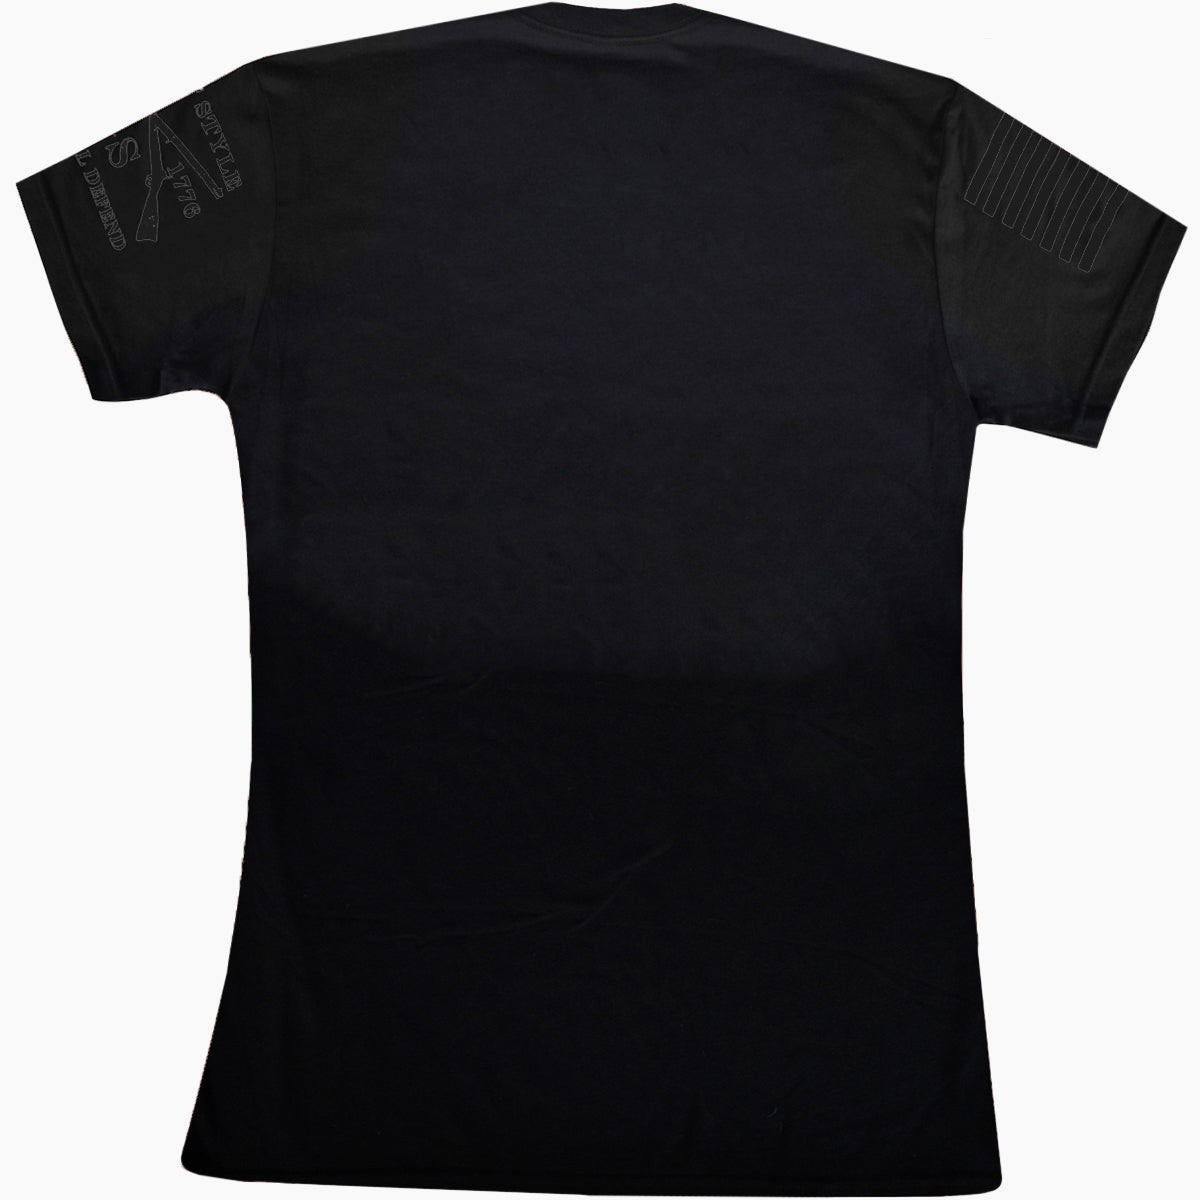 Grunt Style Women's Logo Basic T-Shirt - Black Grunt Style